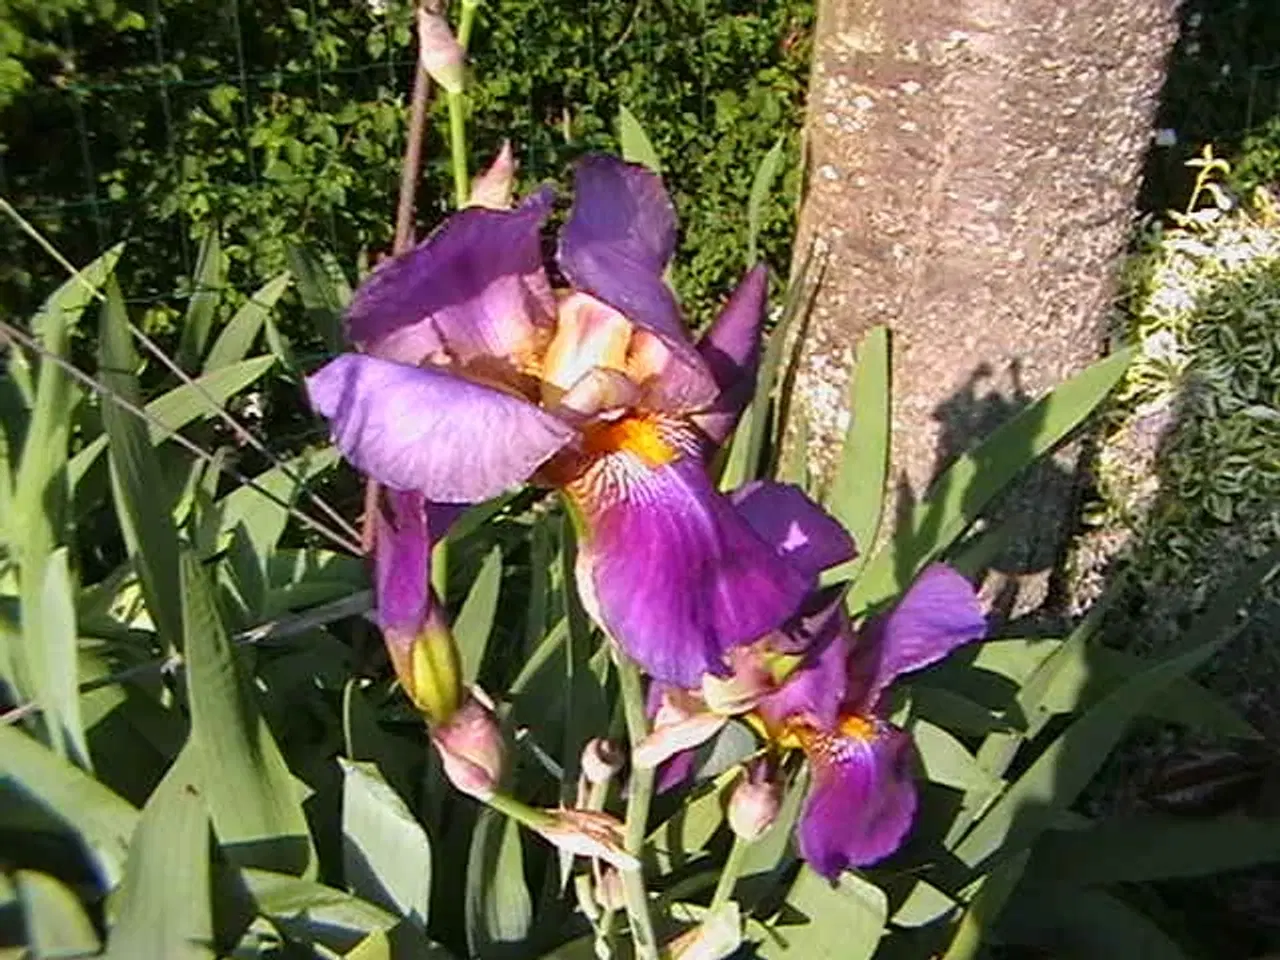 Billede 1 - Stauder. Storblomstrende Iris.